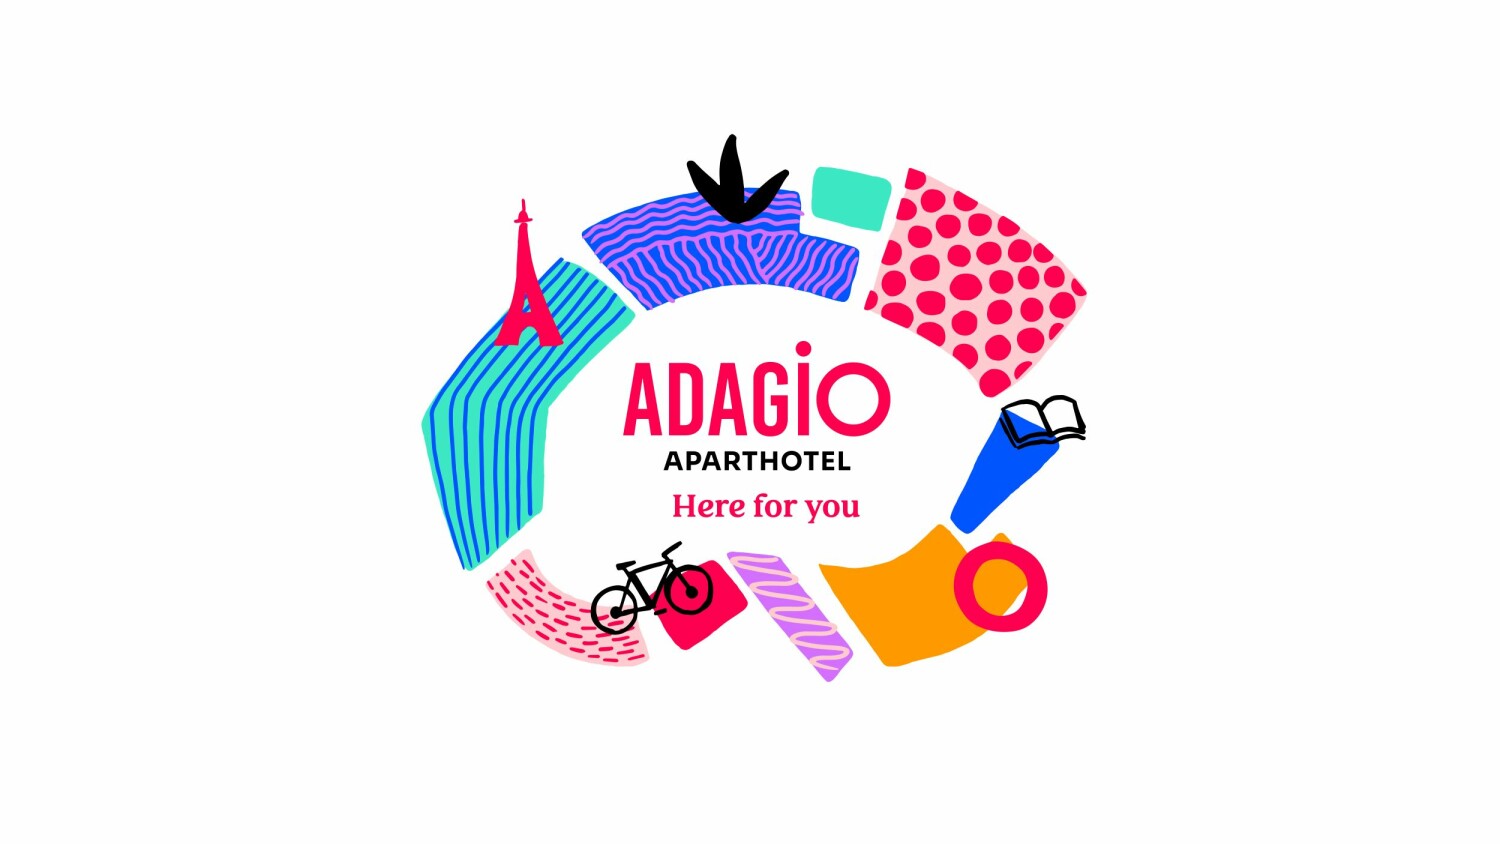 Adagio-charte-jpg